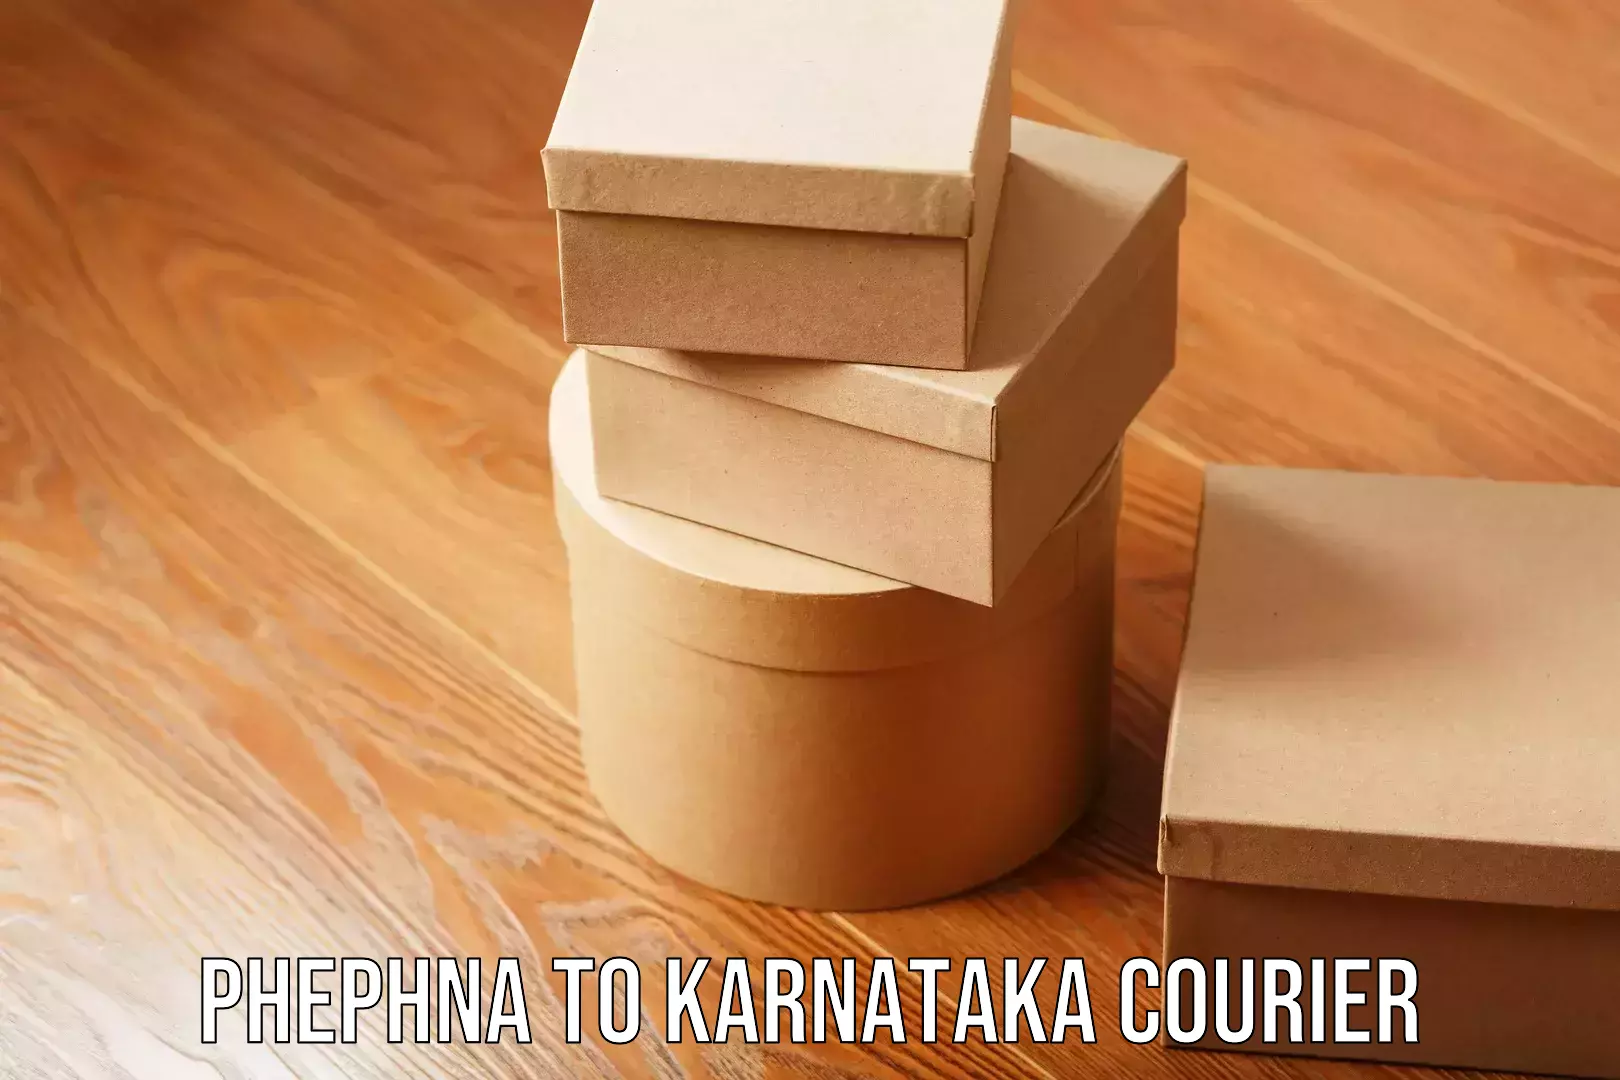 Efficient packing services Phephna to Karnataka